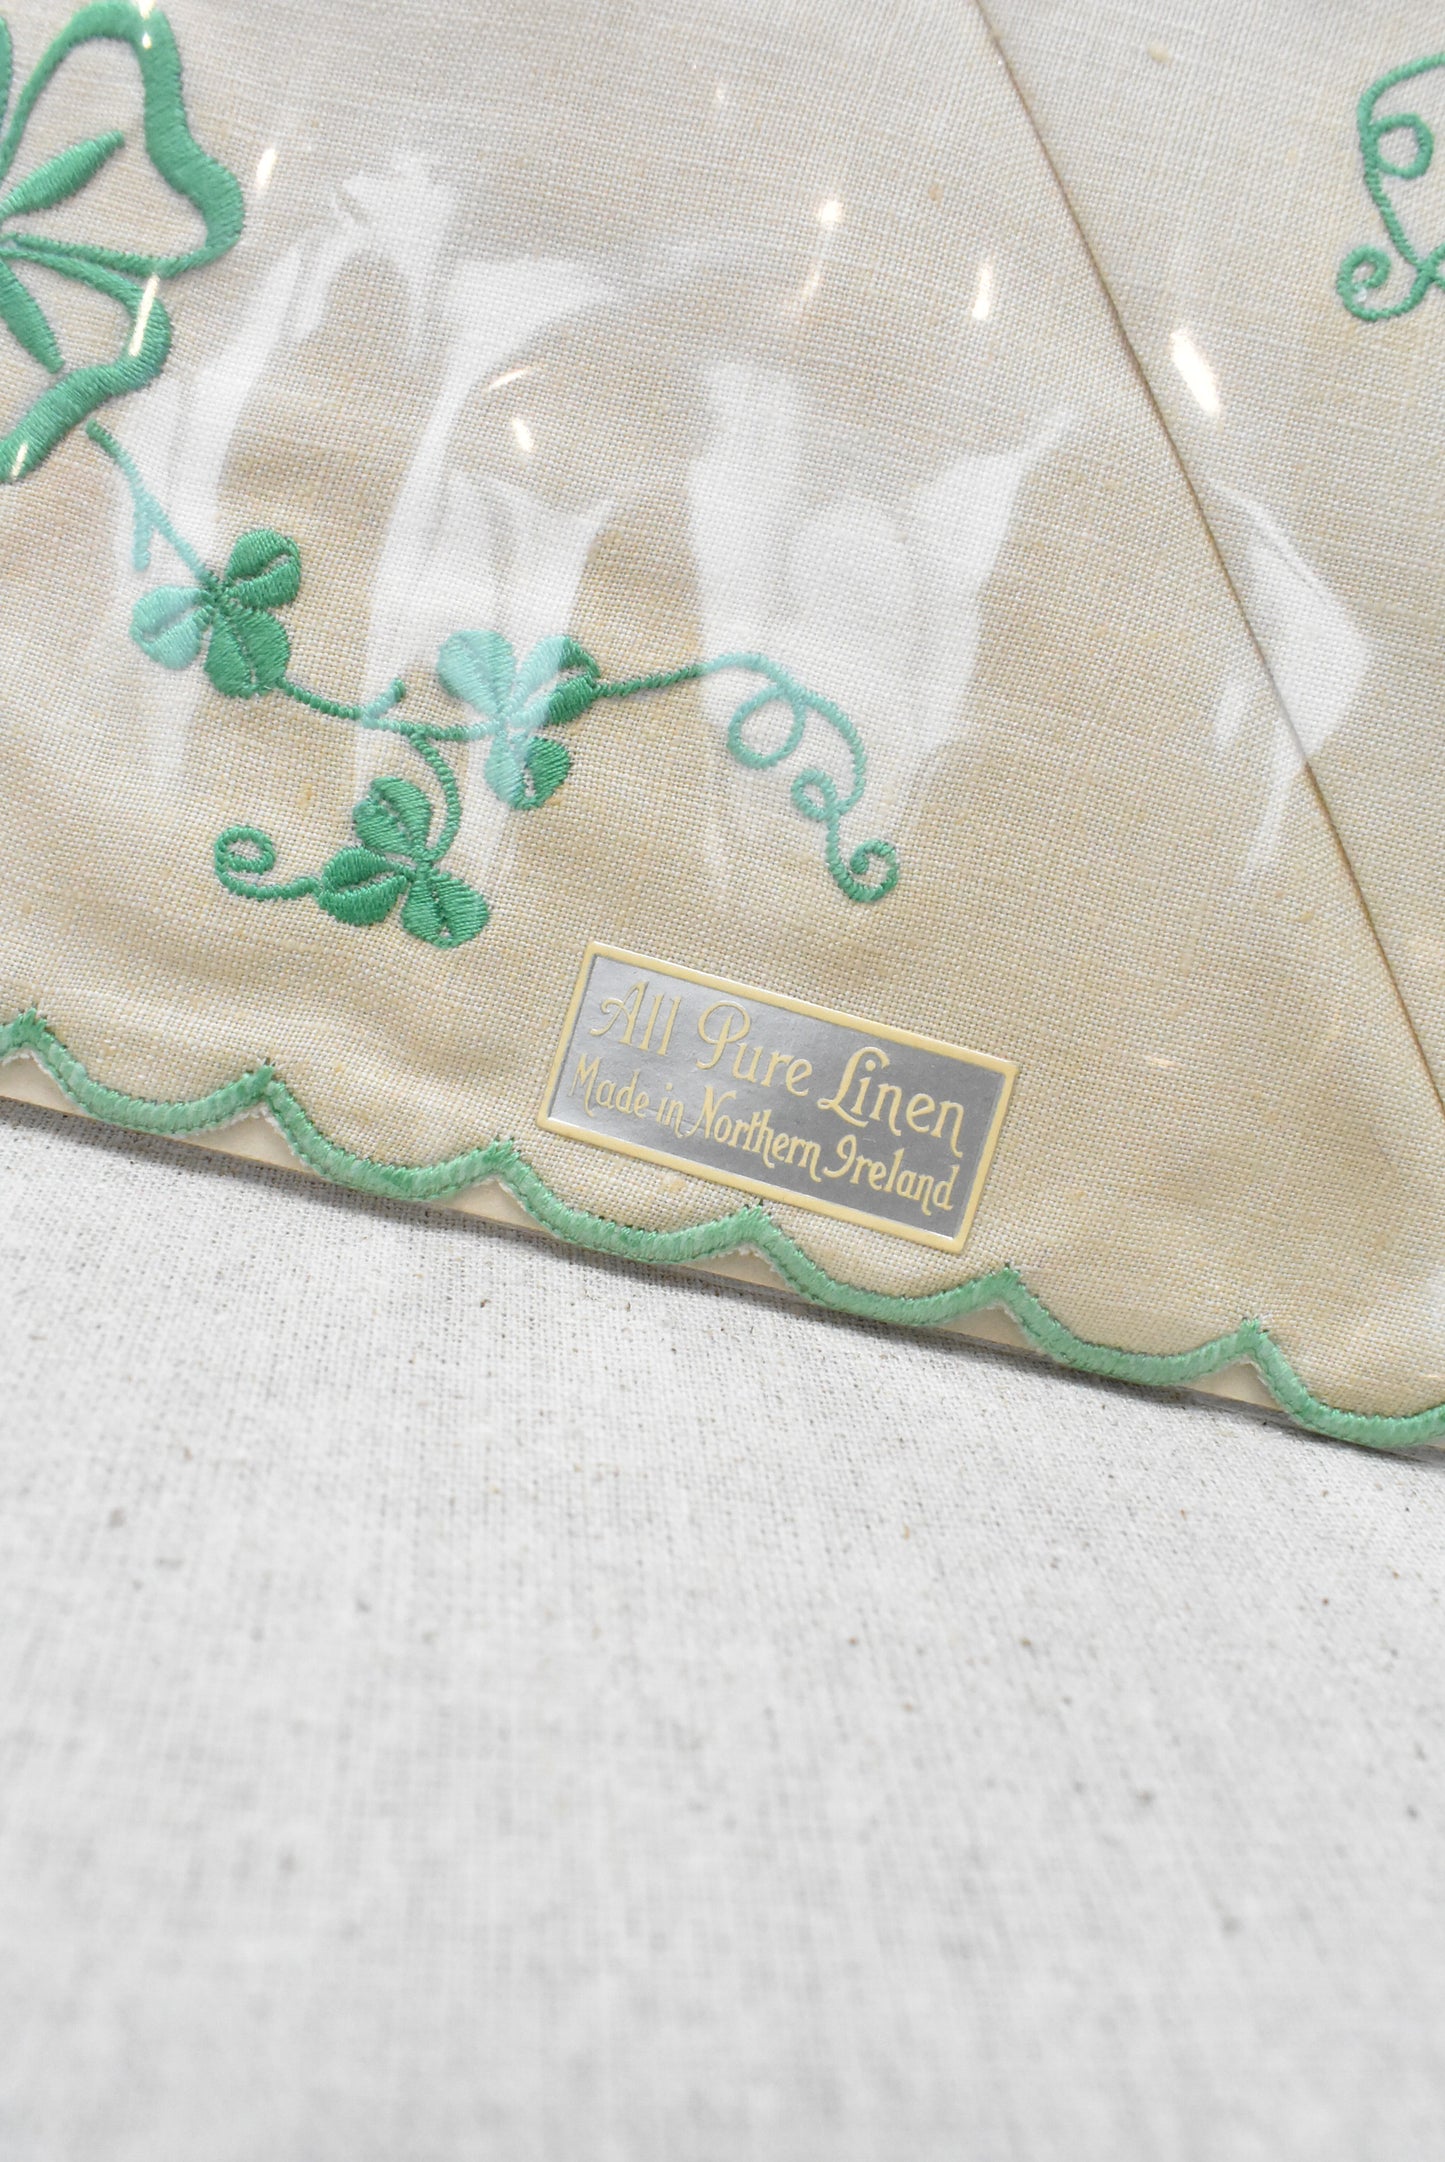 Irish linen embroidered napkins